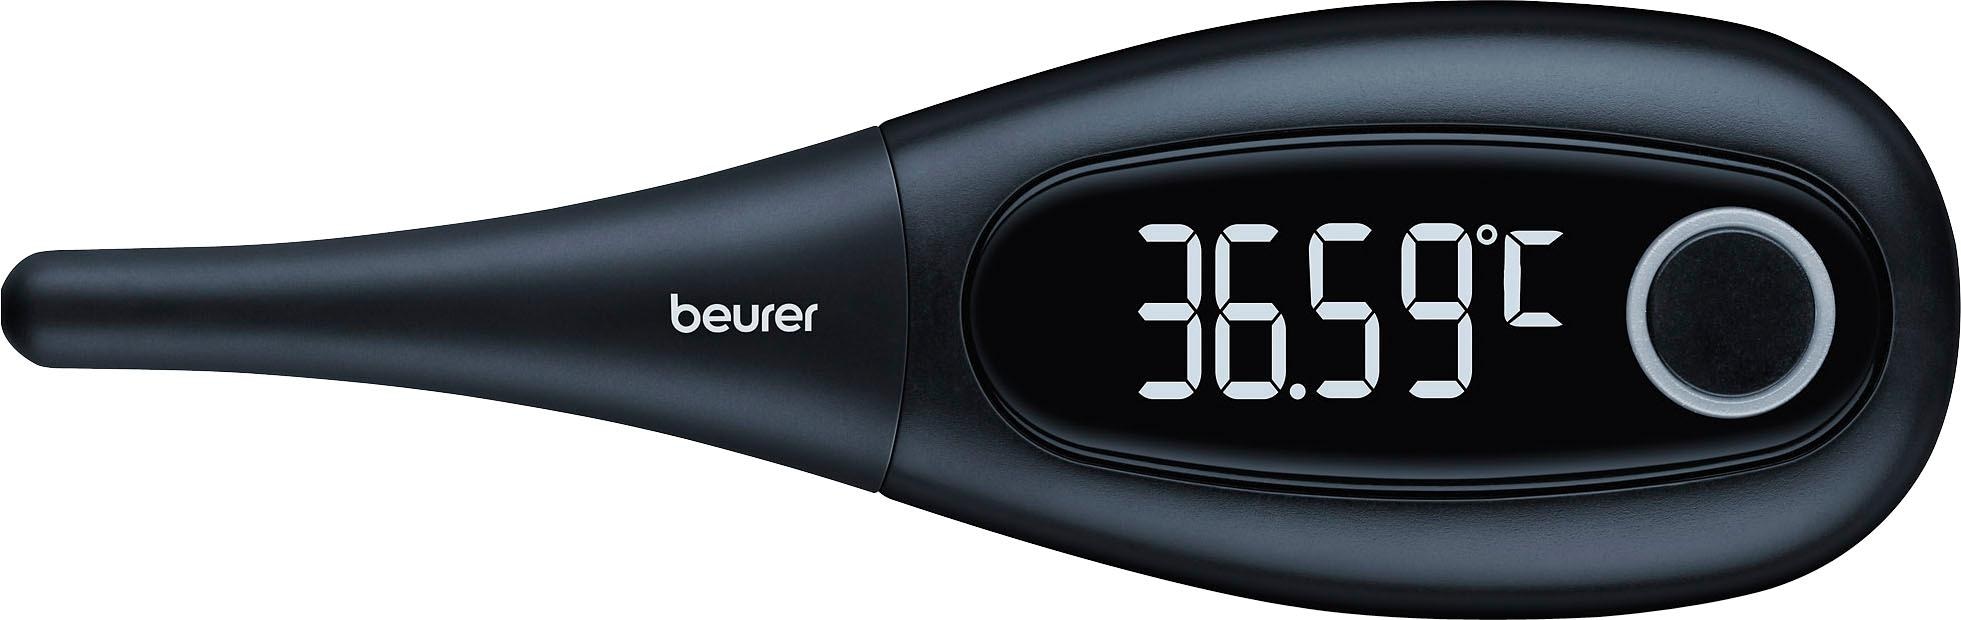 BEURER Fieberthermometer »OT 30 Basalthermometer«